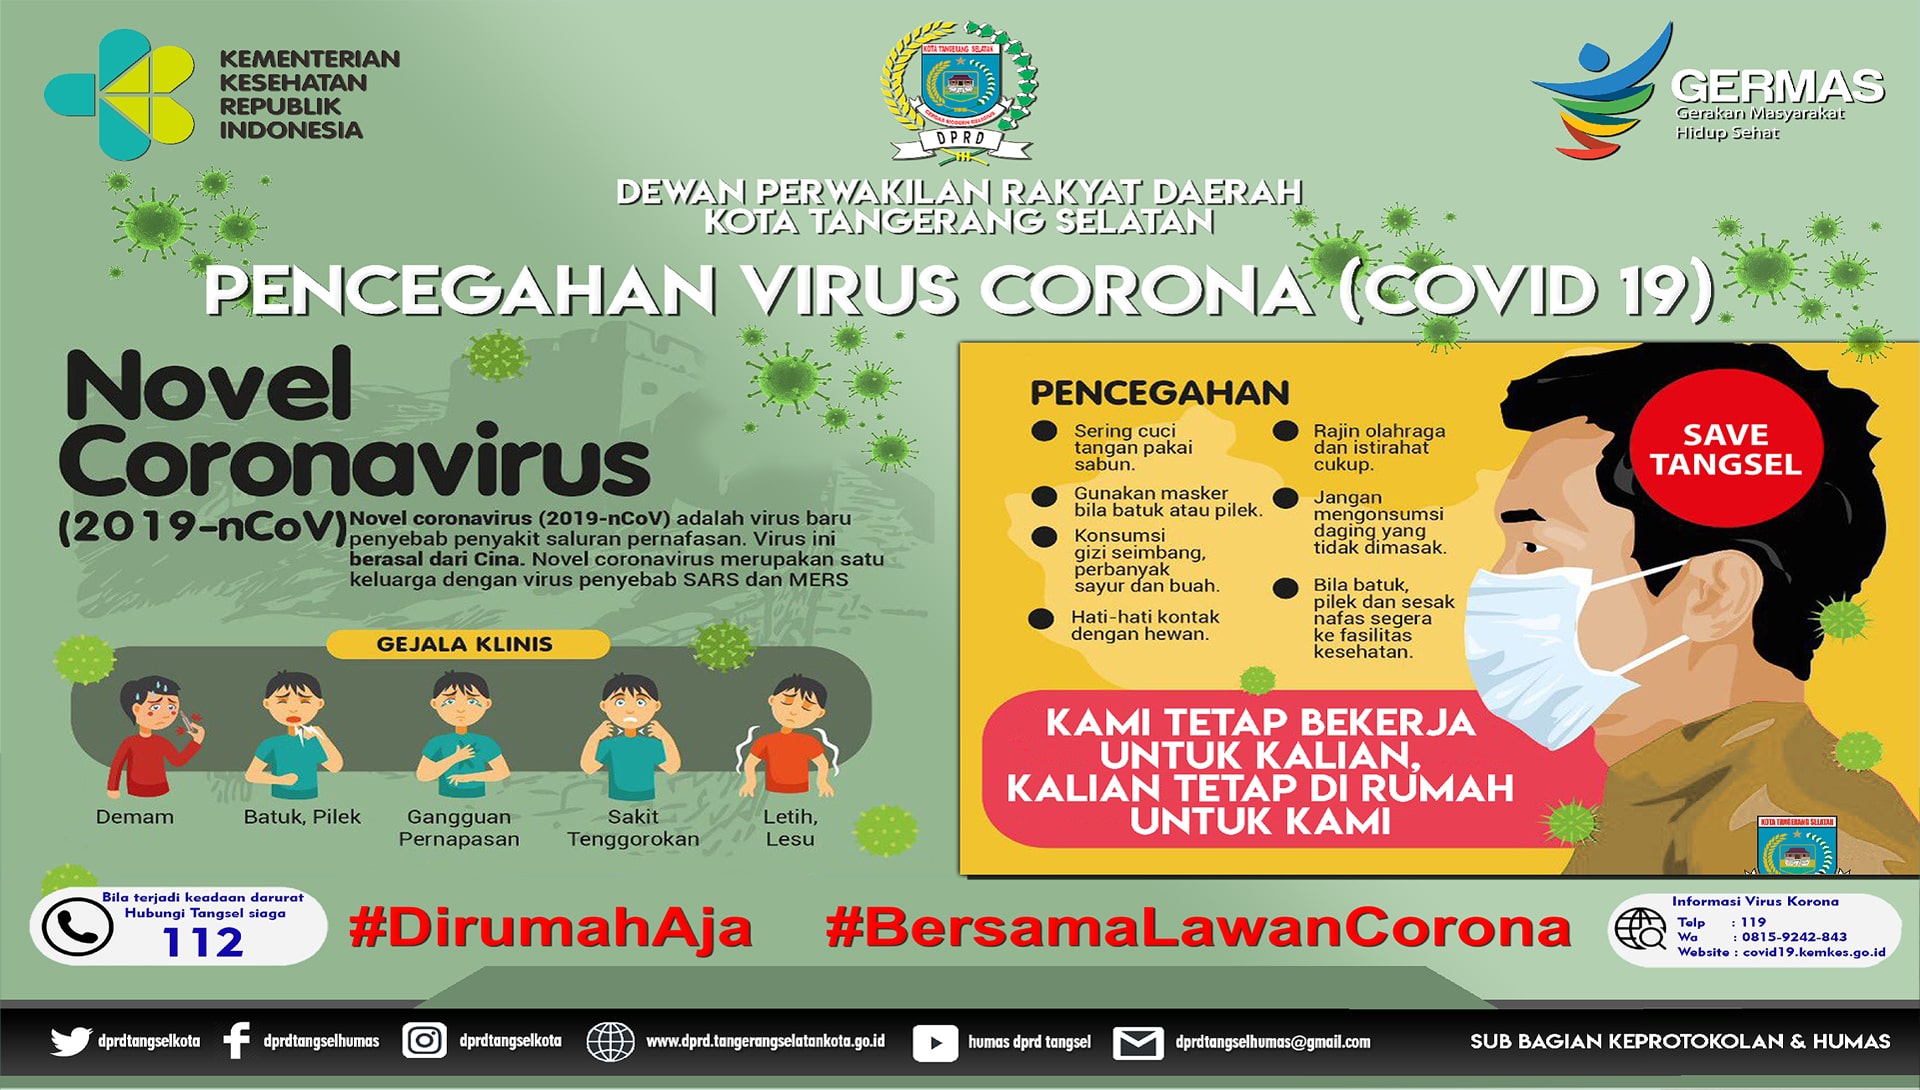 Pencegahan Virus Corona (COVID 19)